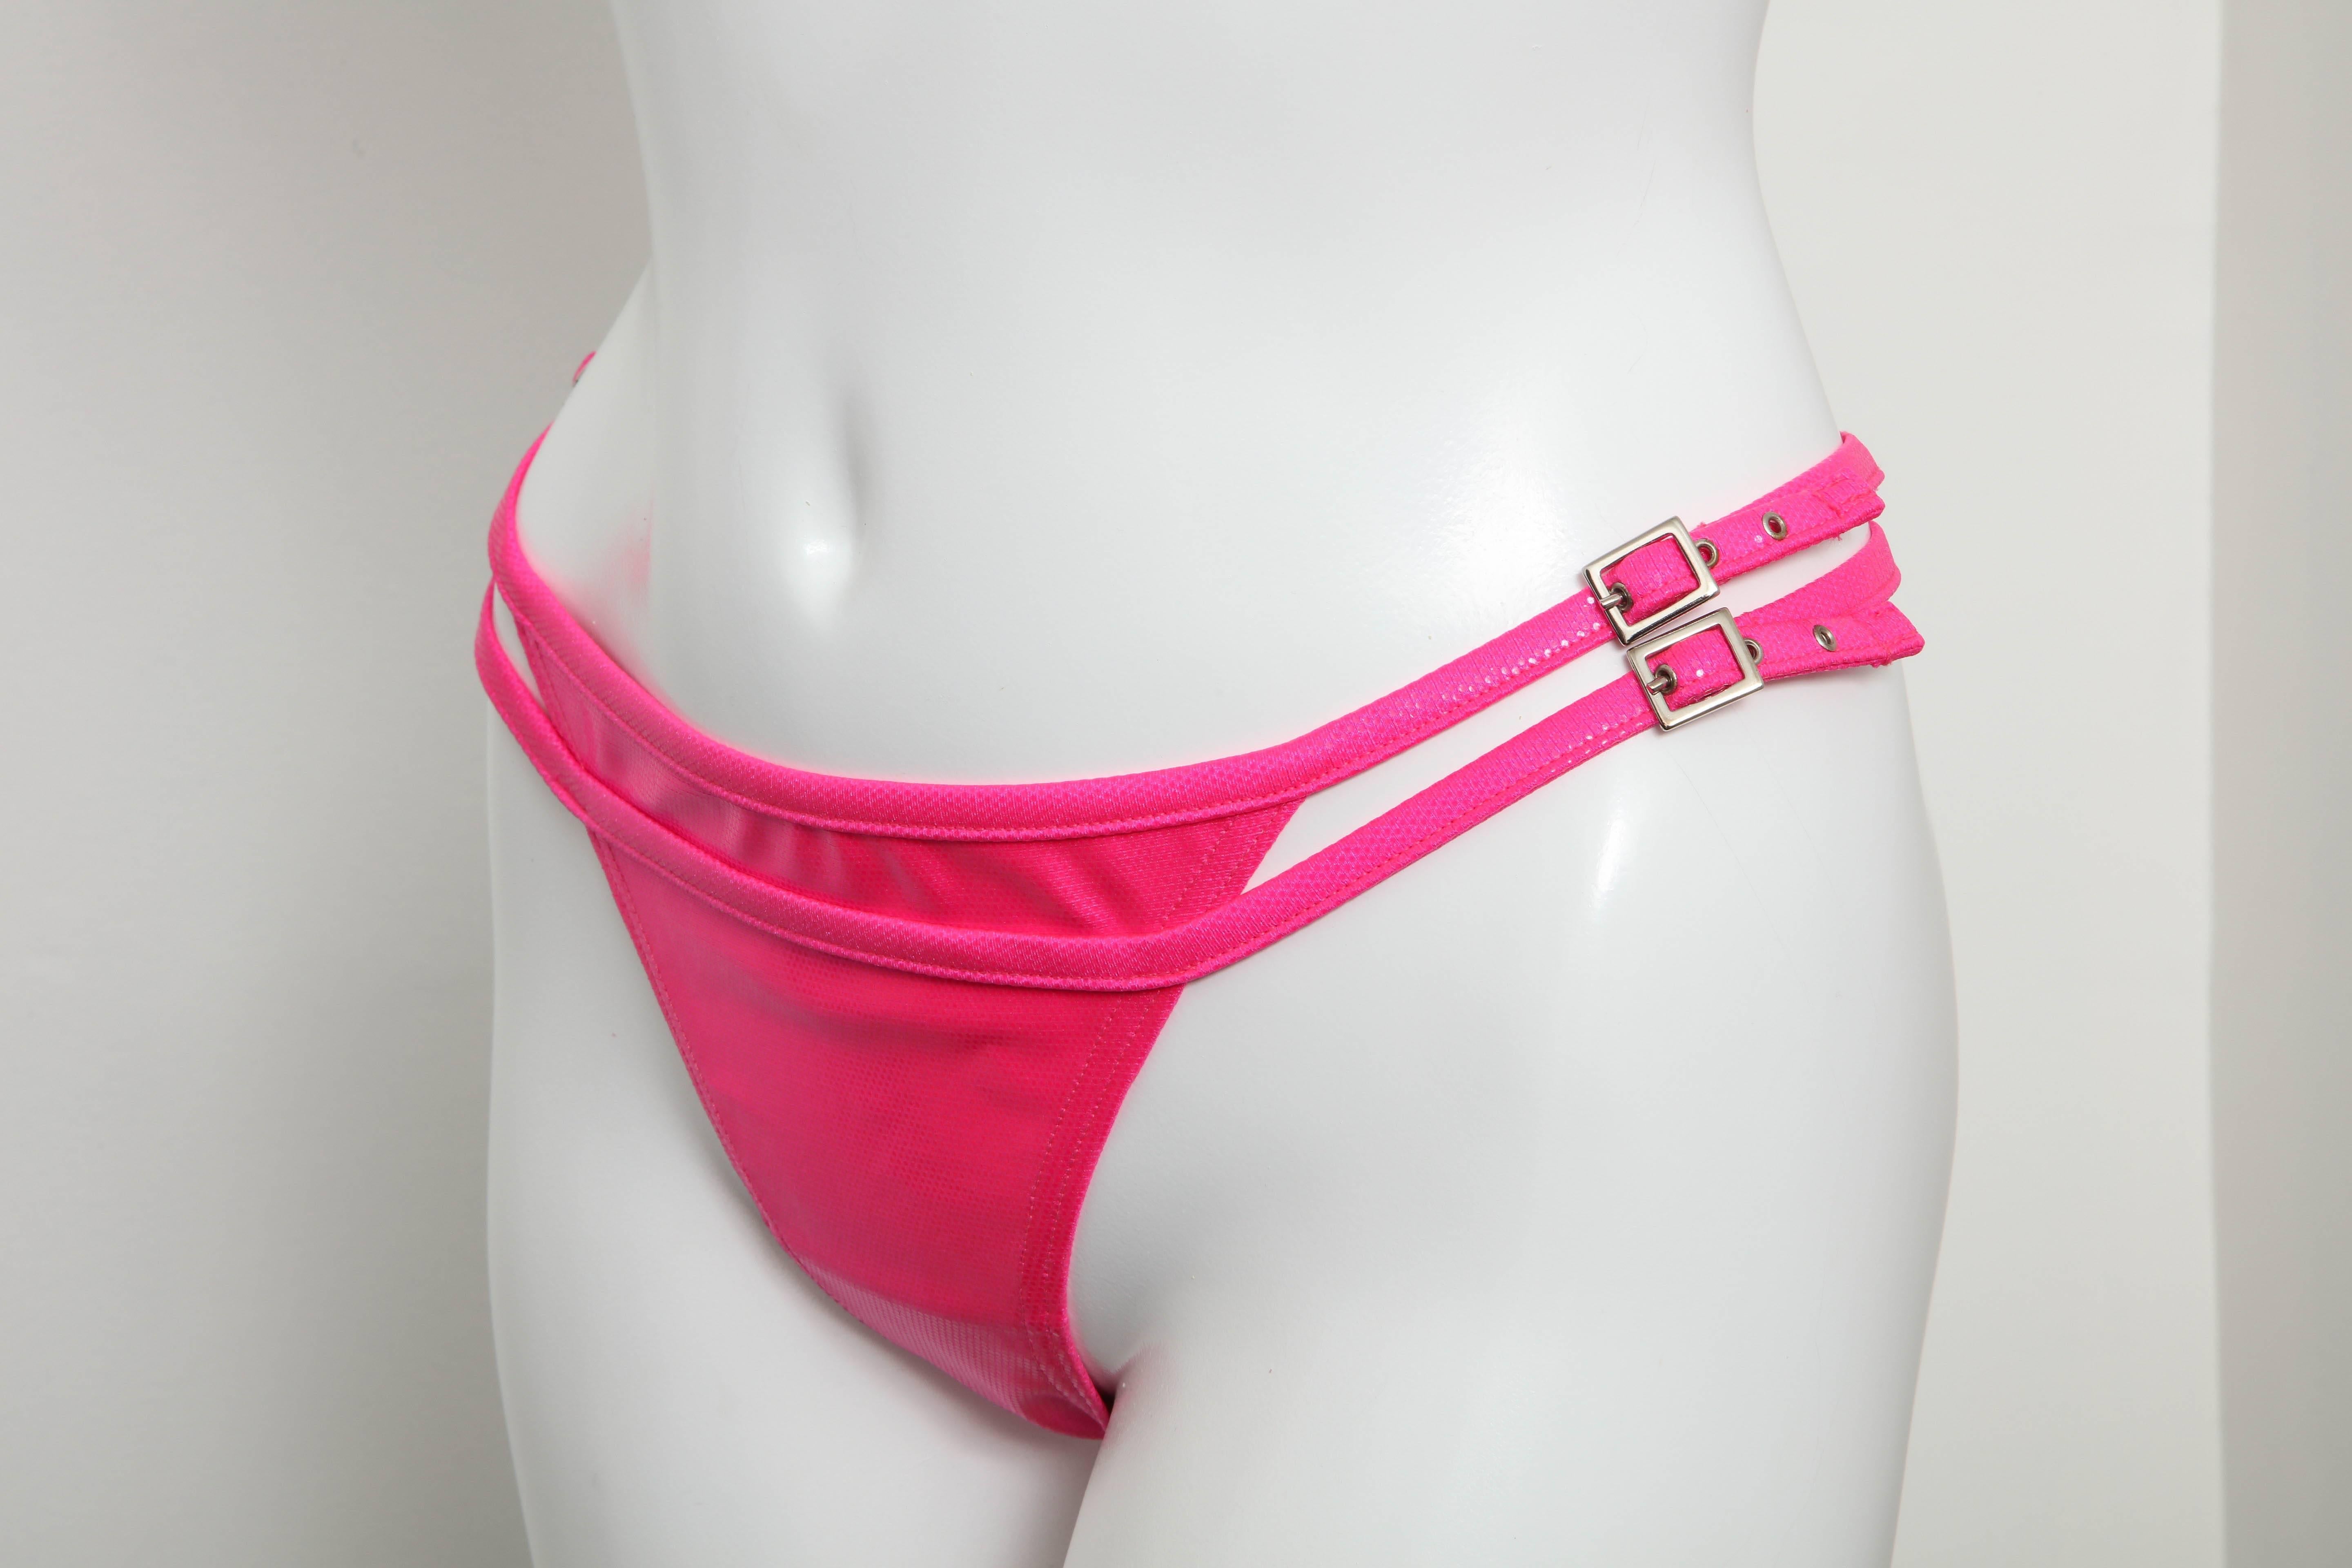 John Galliano for Christian Dior Pink Bikini For Sale 1